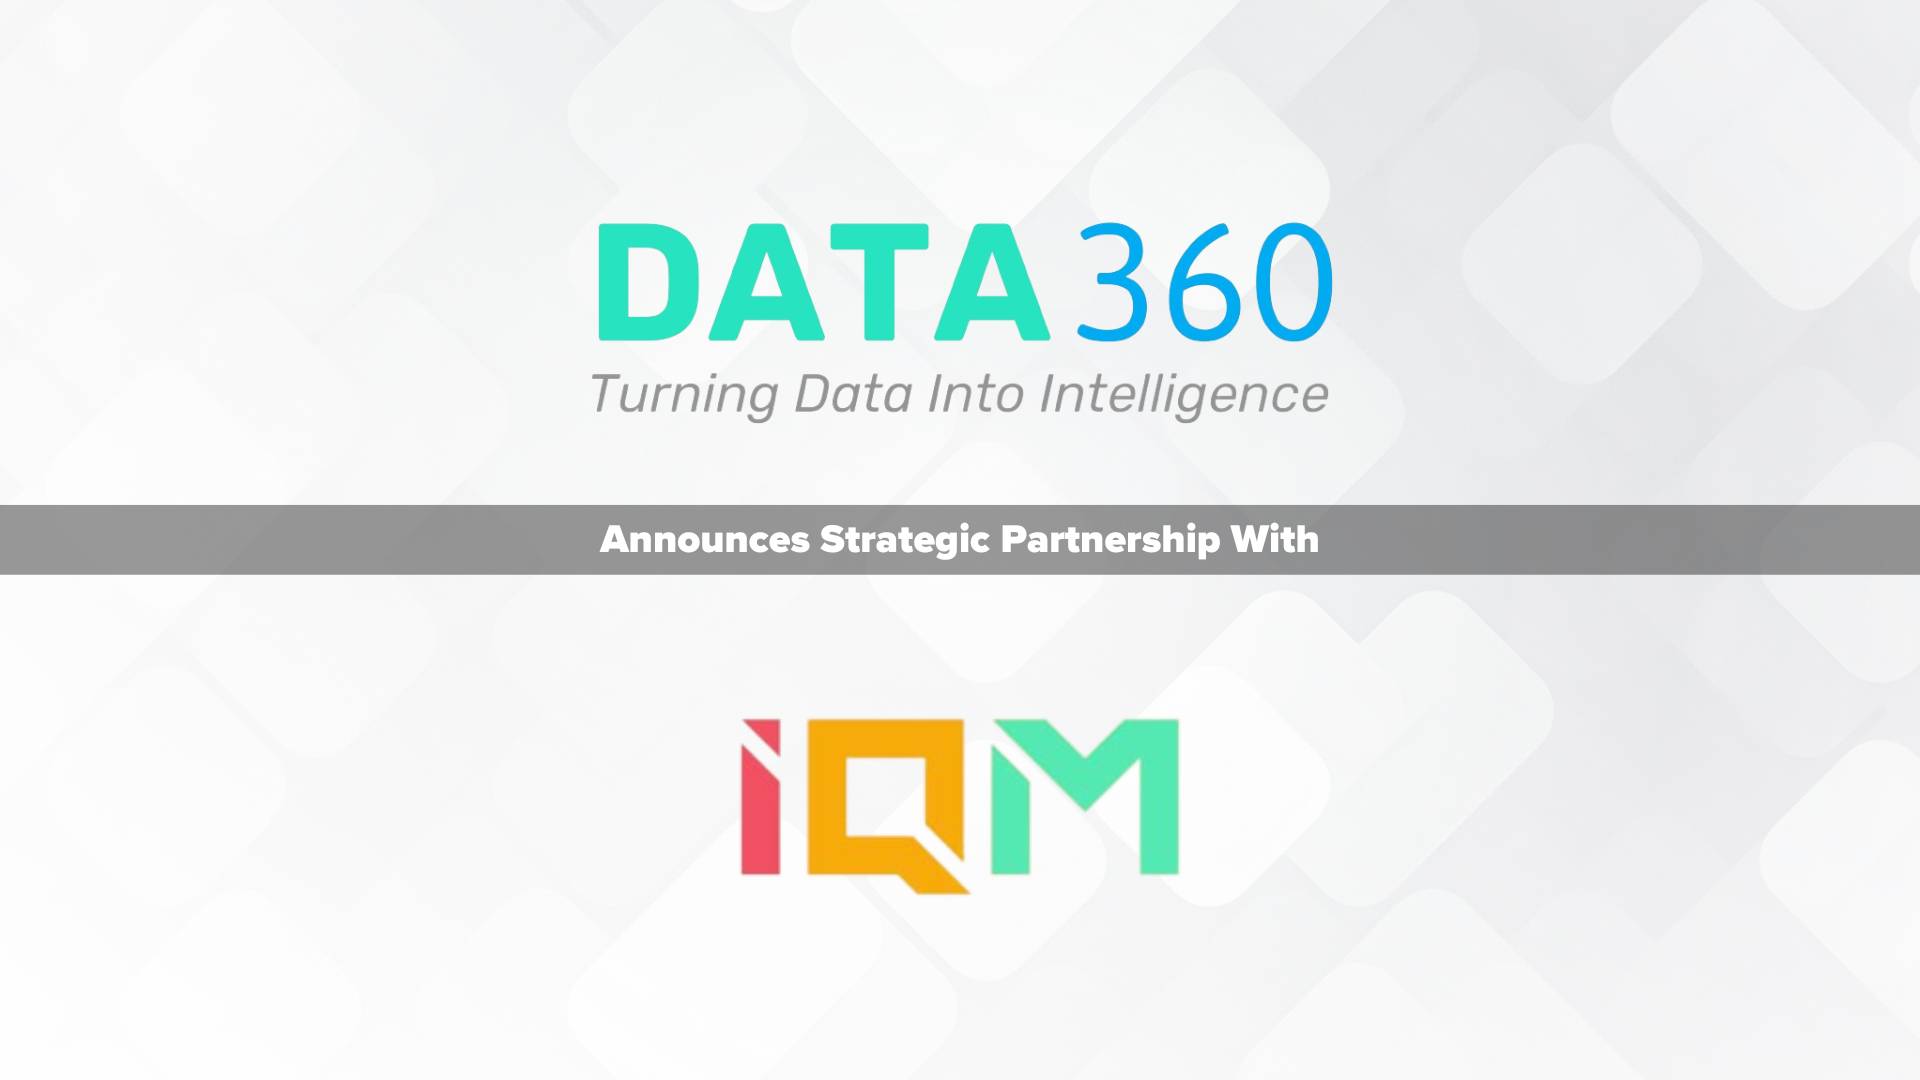 Data360 announces strategic partnership with IQM